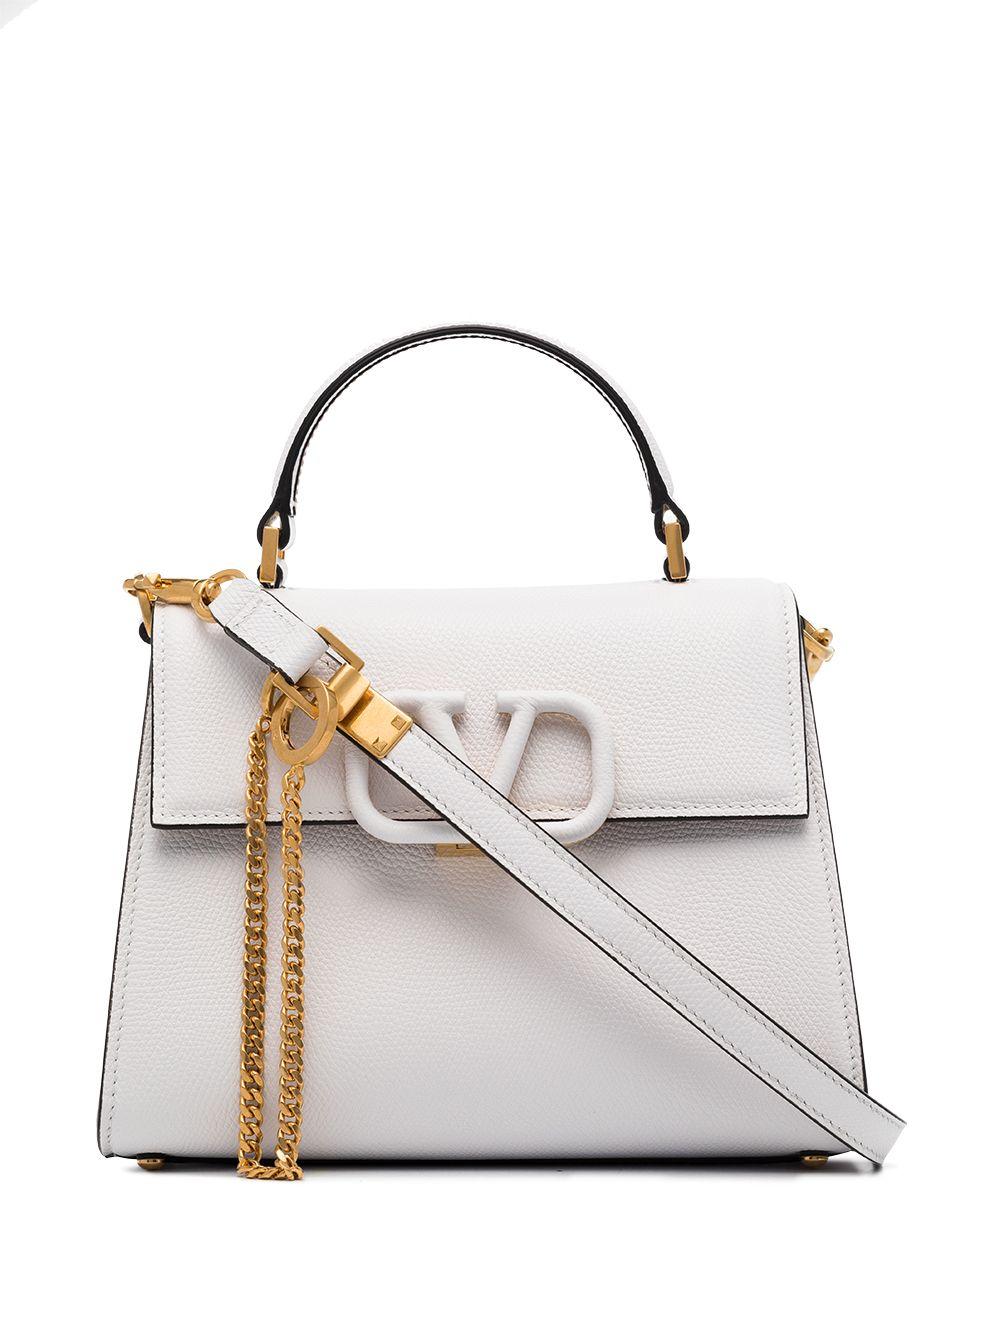 Valentino Garavani Small Vsling Top-handle Bag in White - Lyst